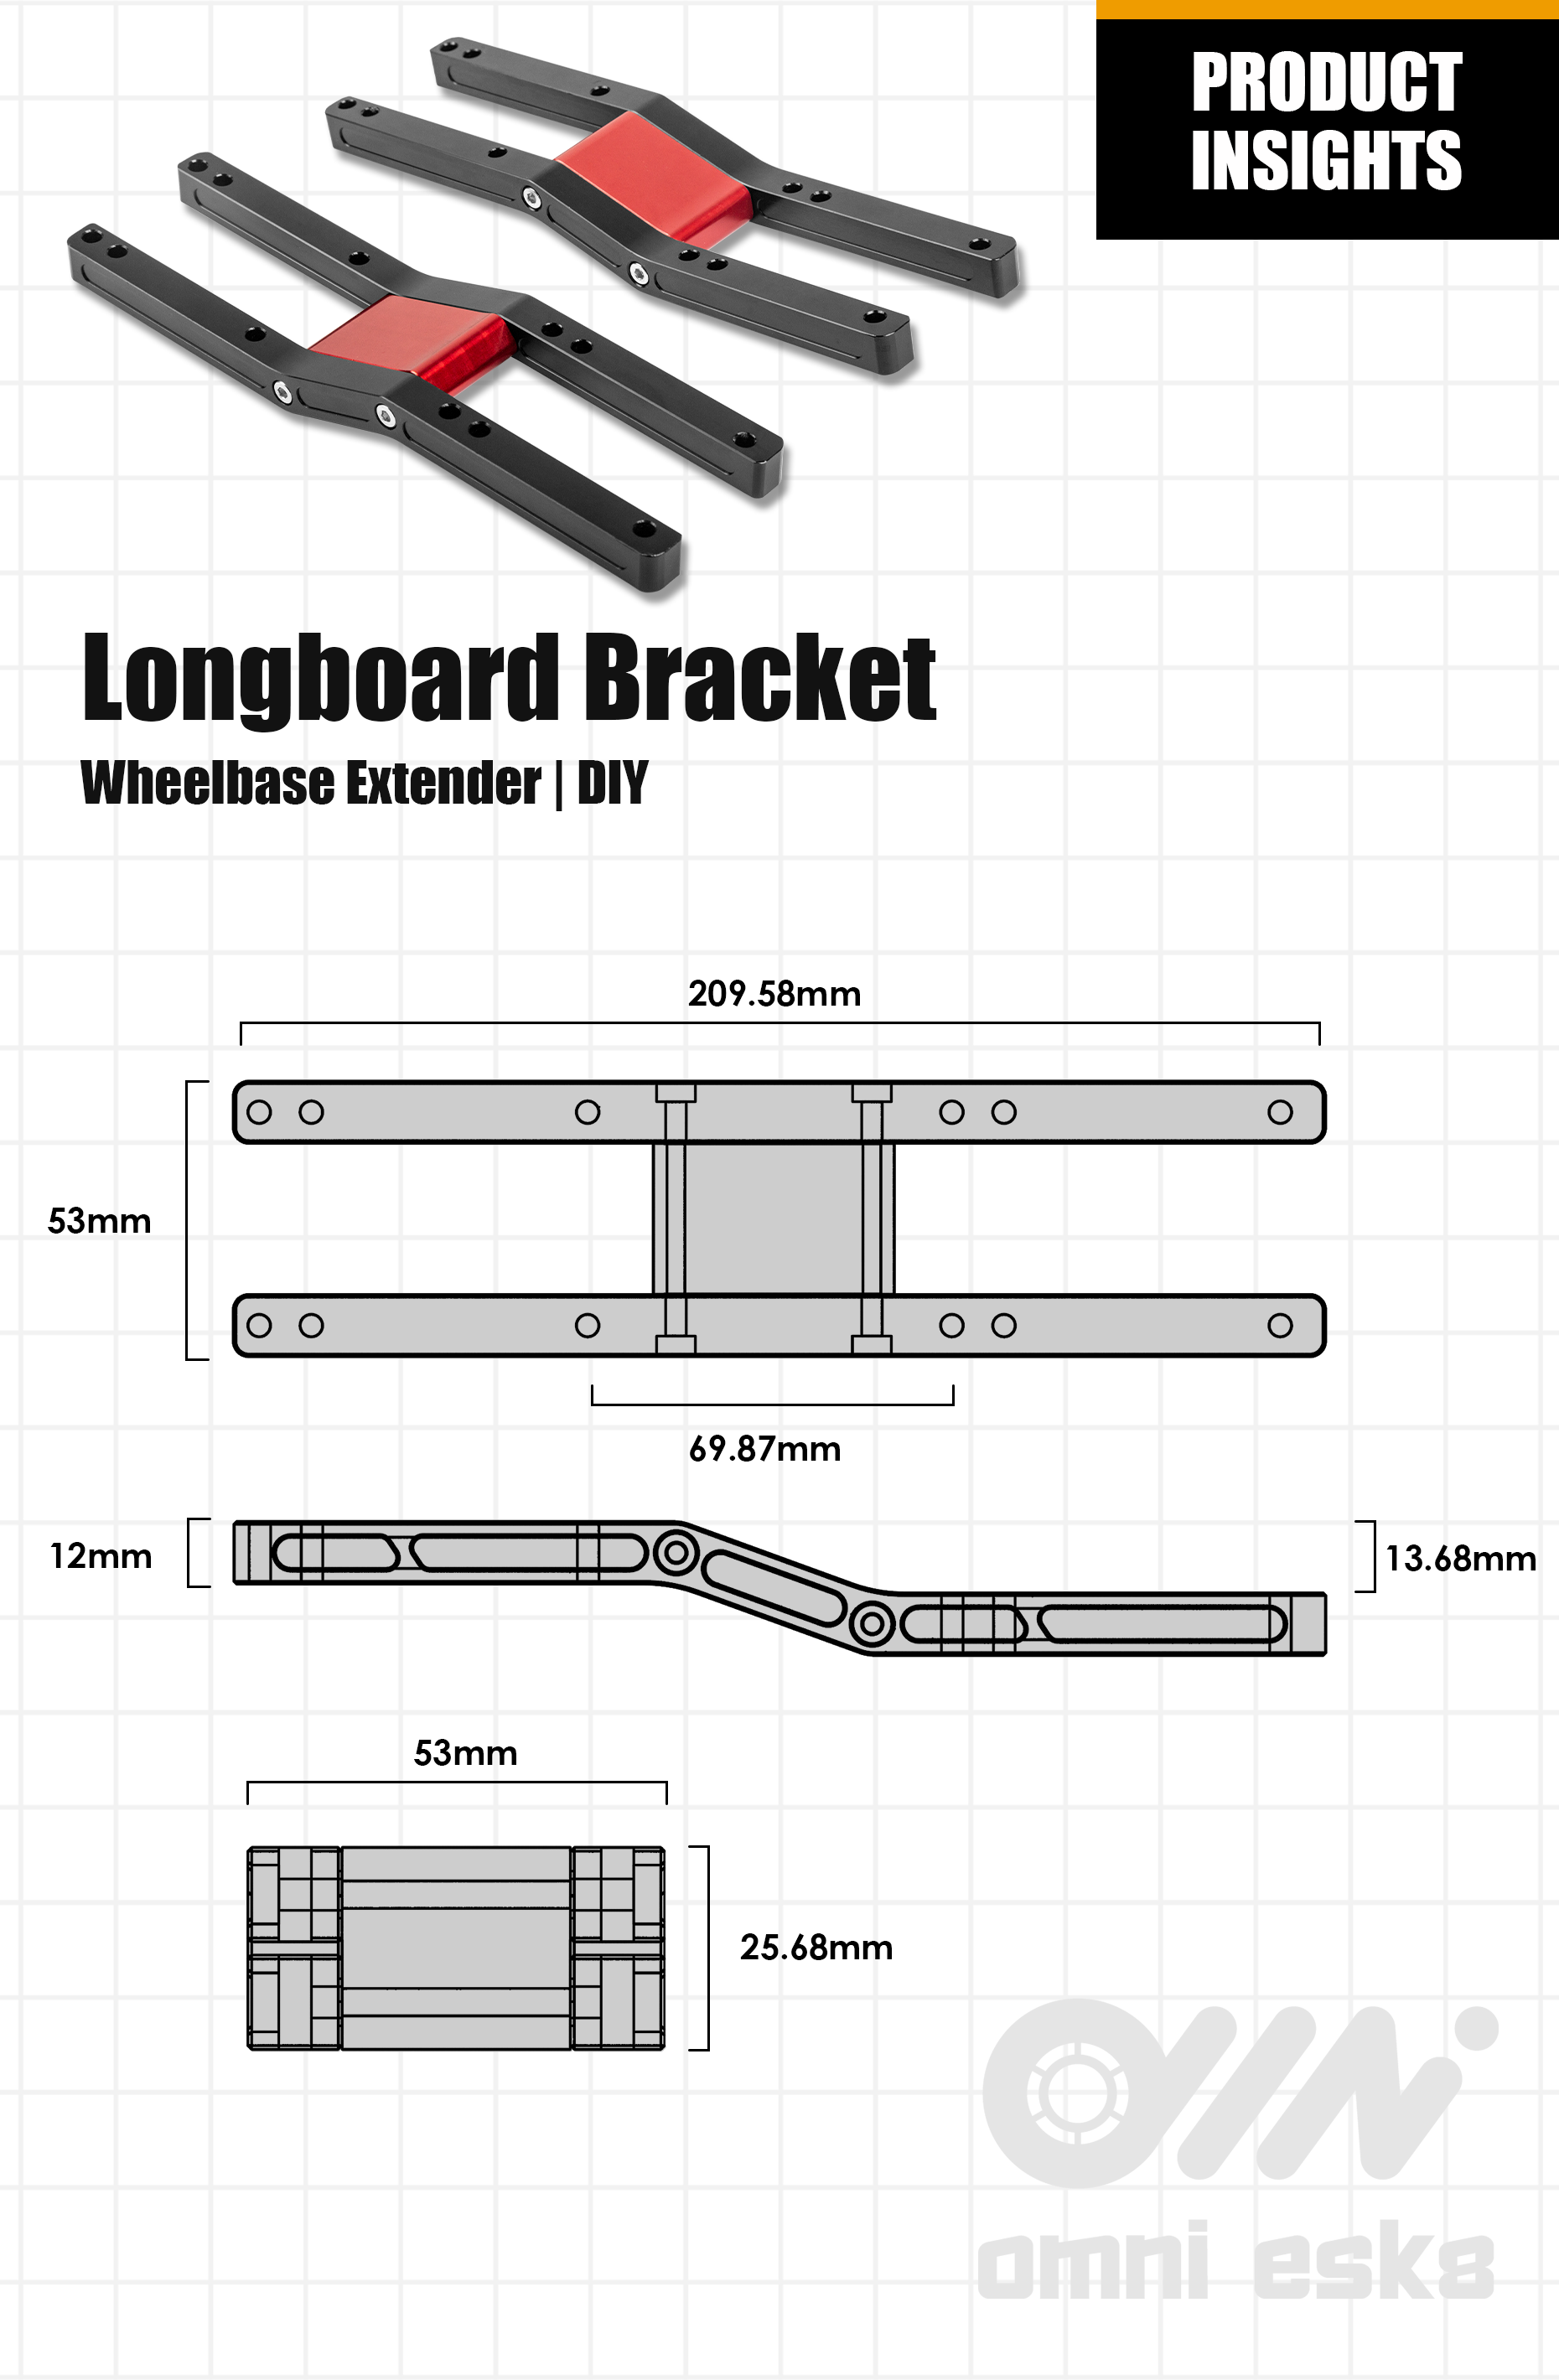 Omni Esk8 Longboard Bracket